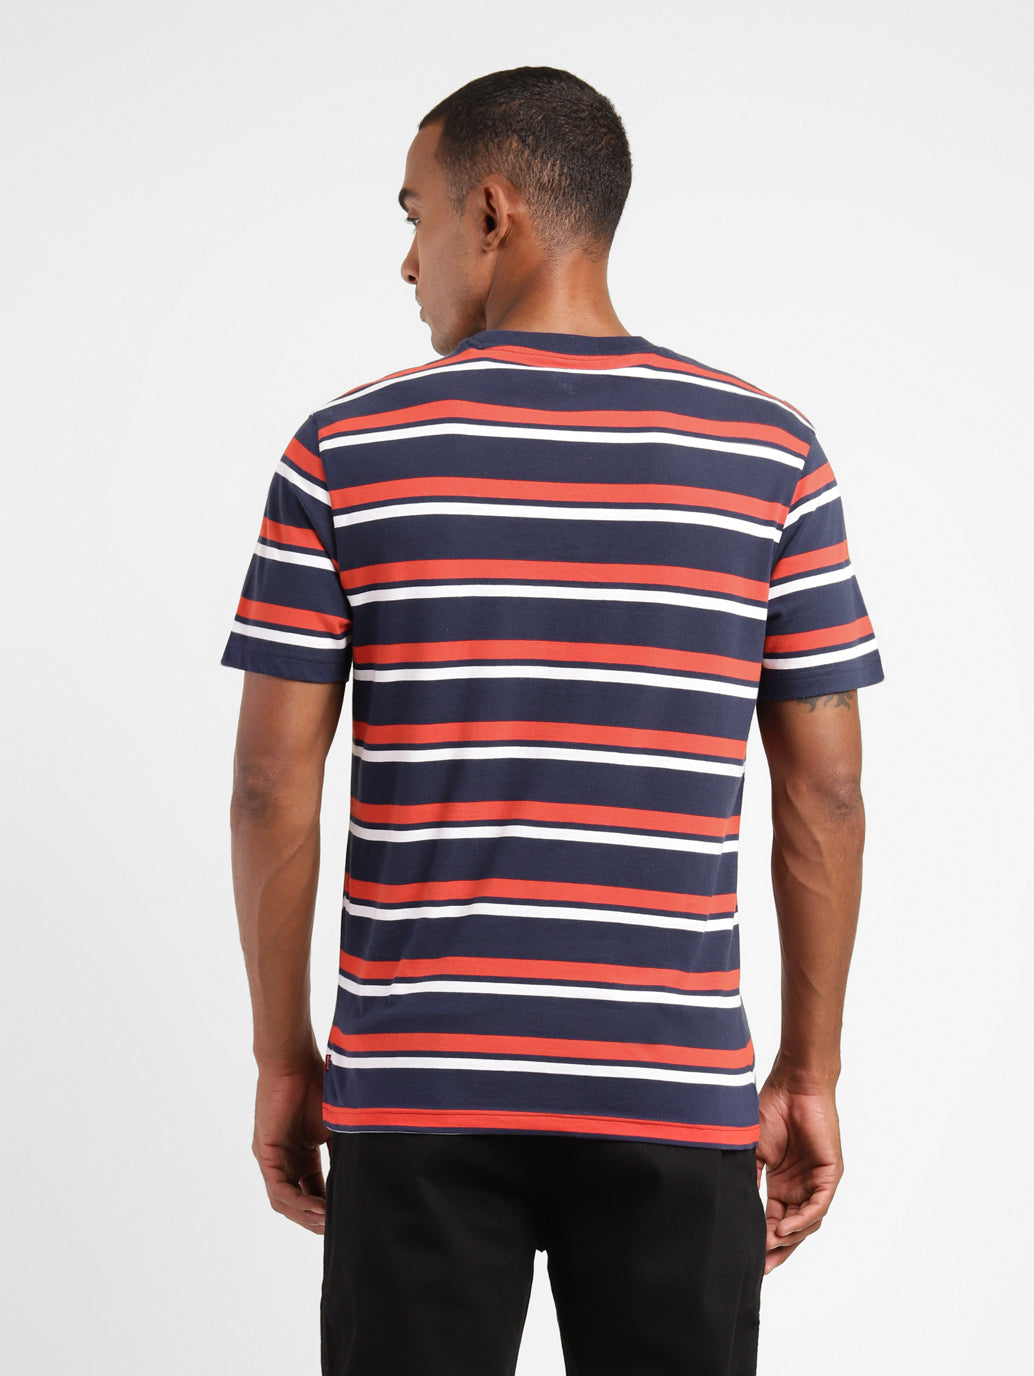 Men's Striped Crew Neck T-shirt